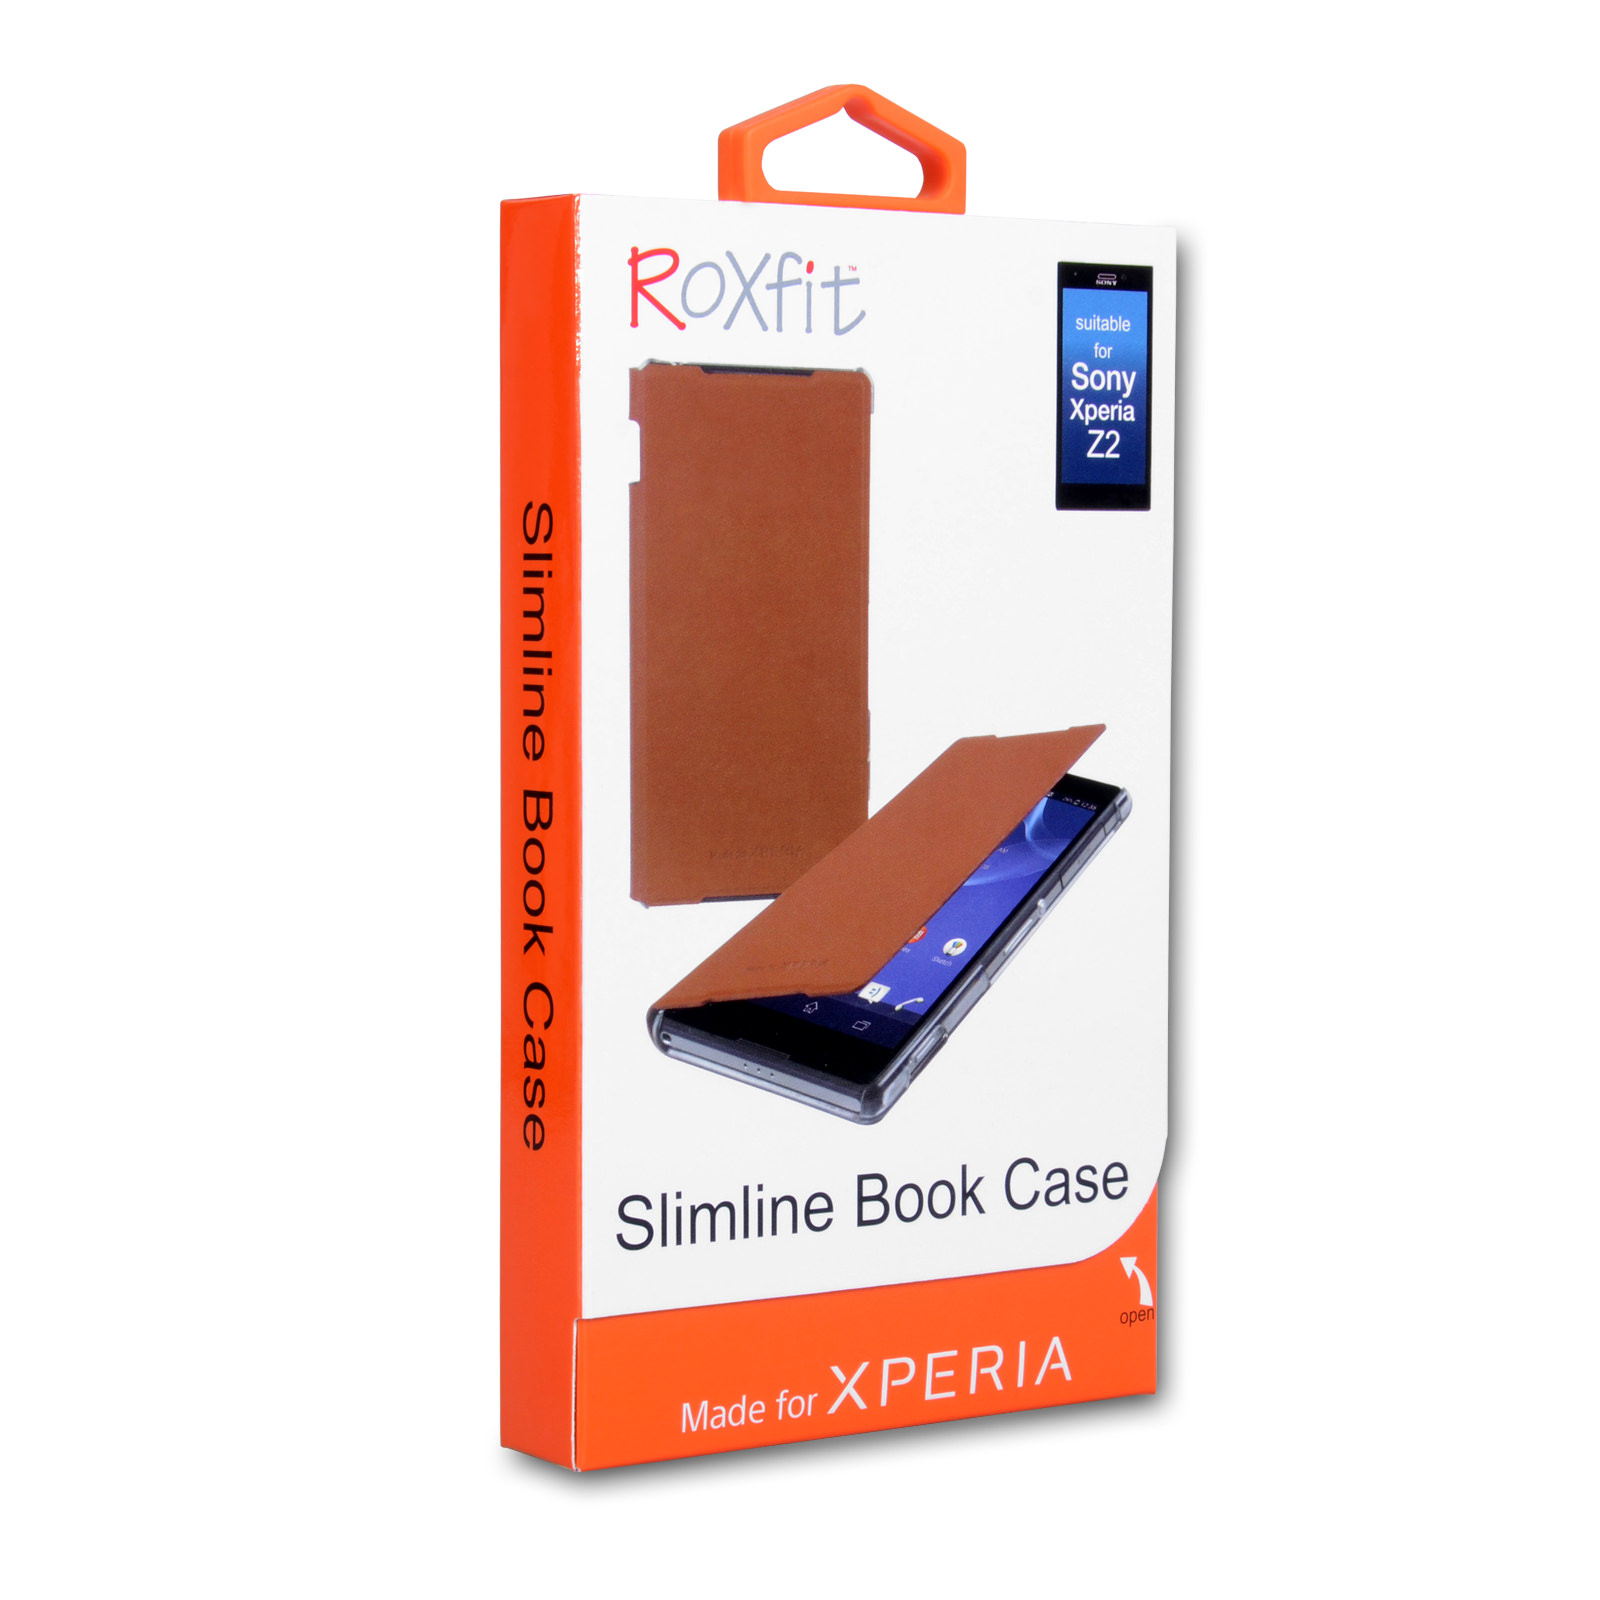 Roxfit Standing Book Case for Sony Xperia Z2 - Dark Tan